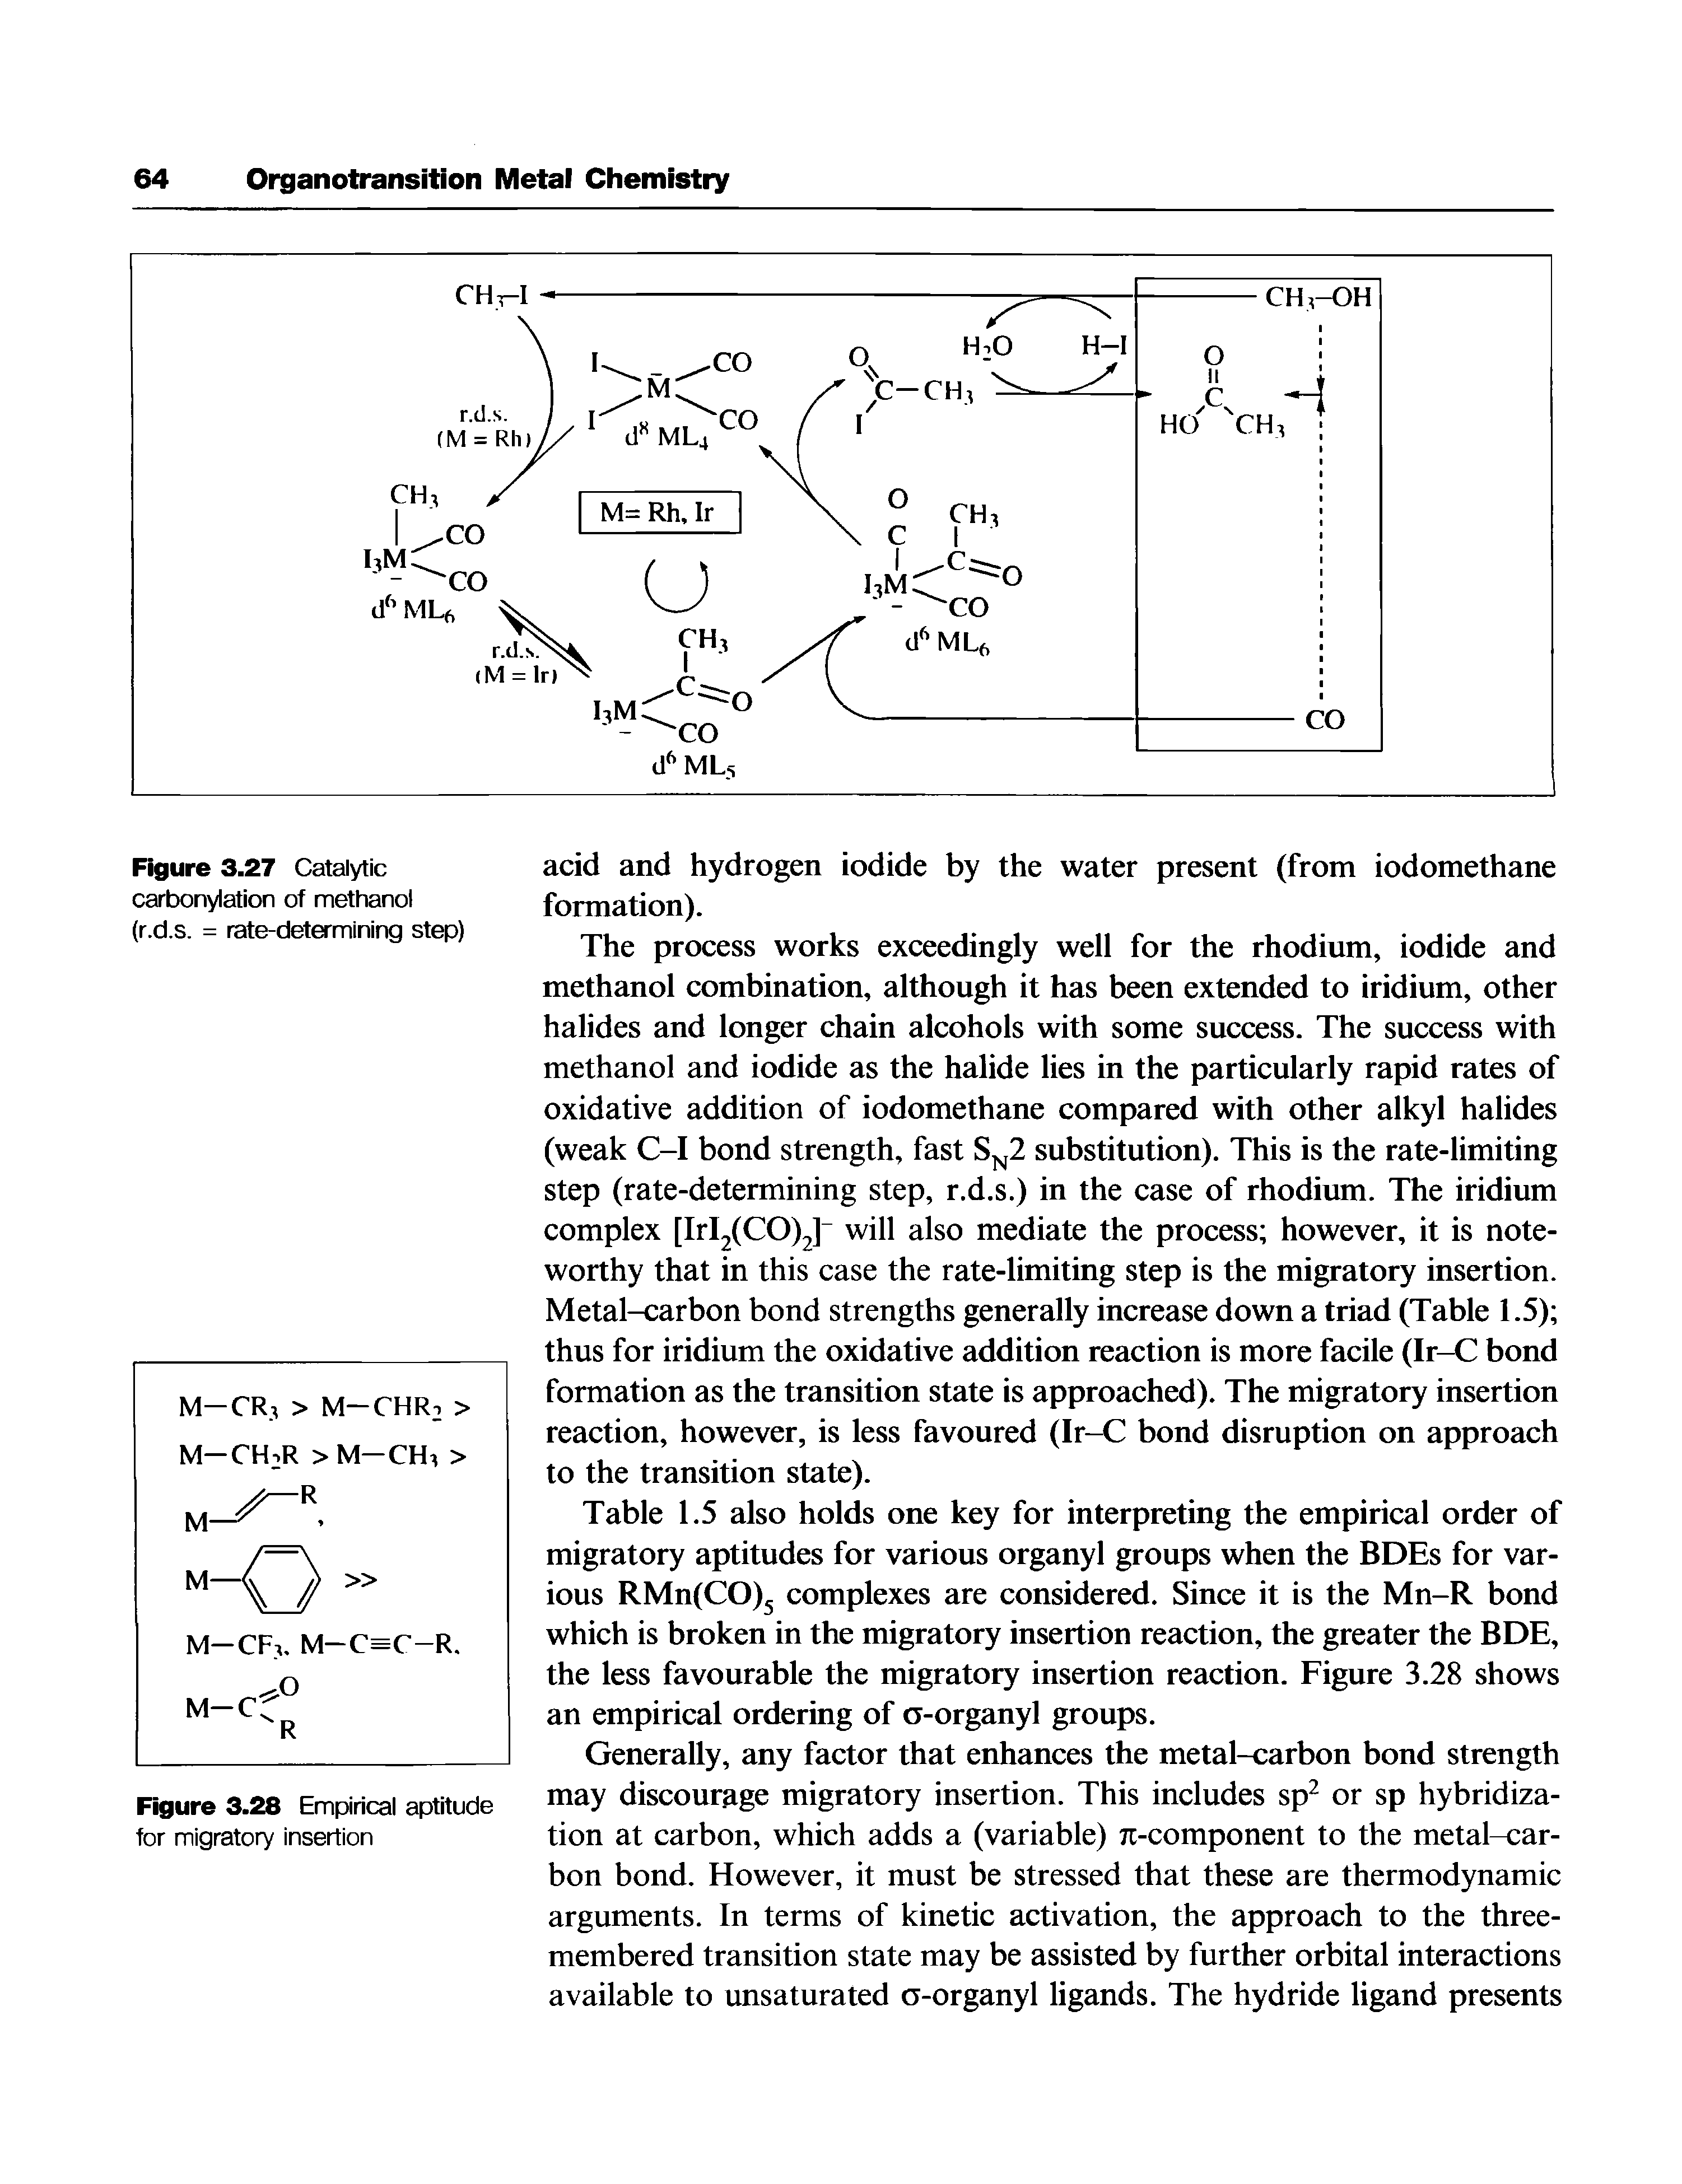 Figure 3.27 Catalytic carbonylation of methanol (r.d.s. = rate-determining step)...